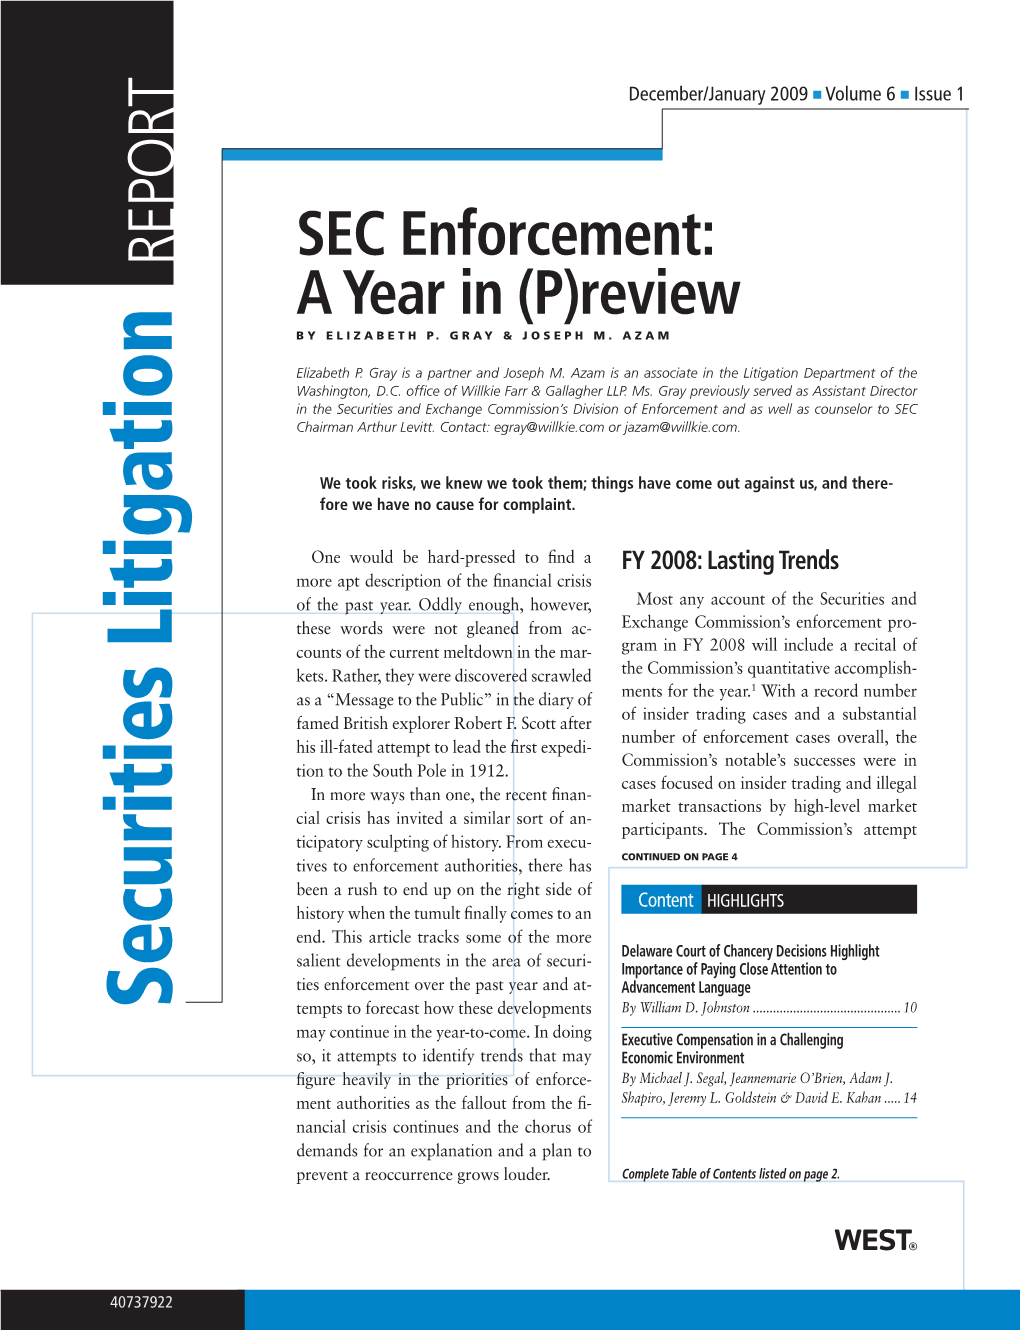 SEC Enforcement: a Year in (P)Review by Elizabeth P